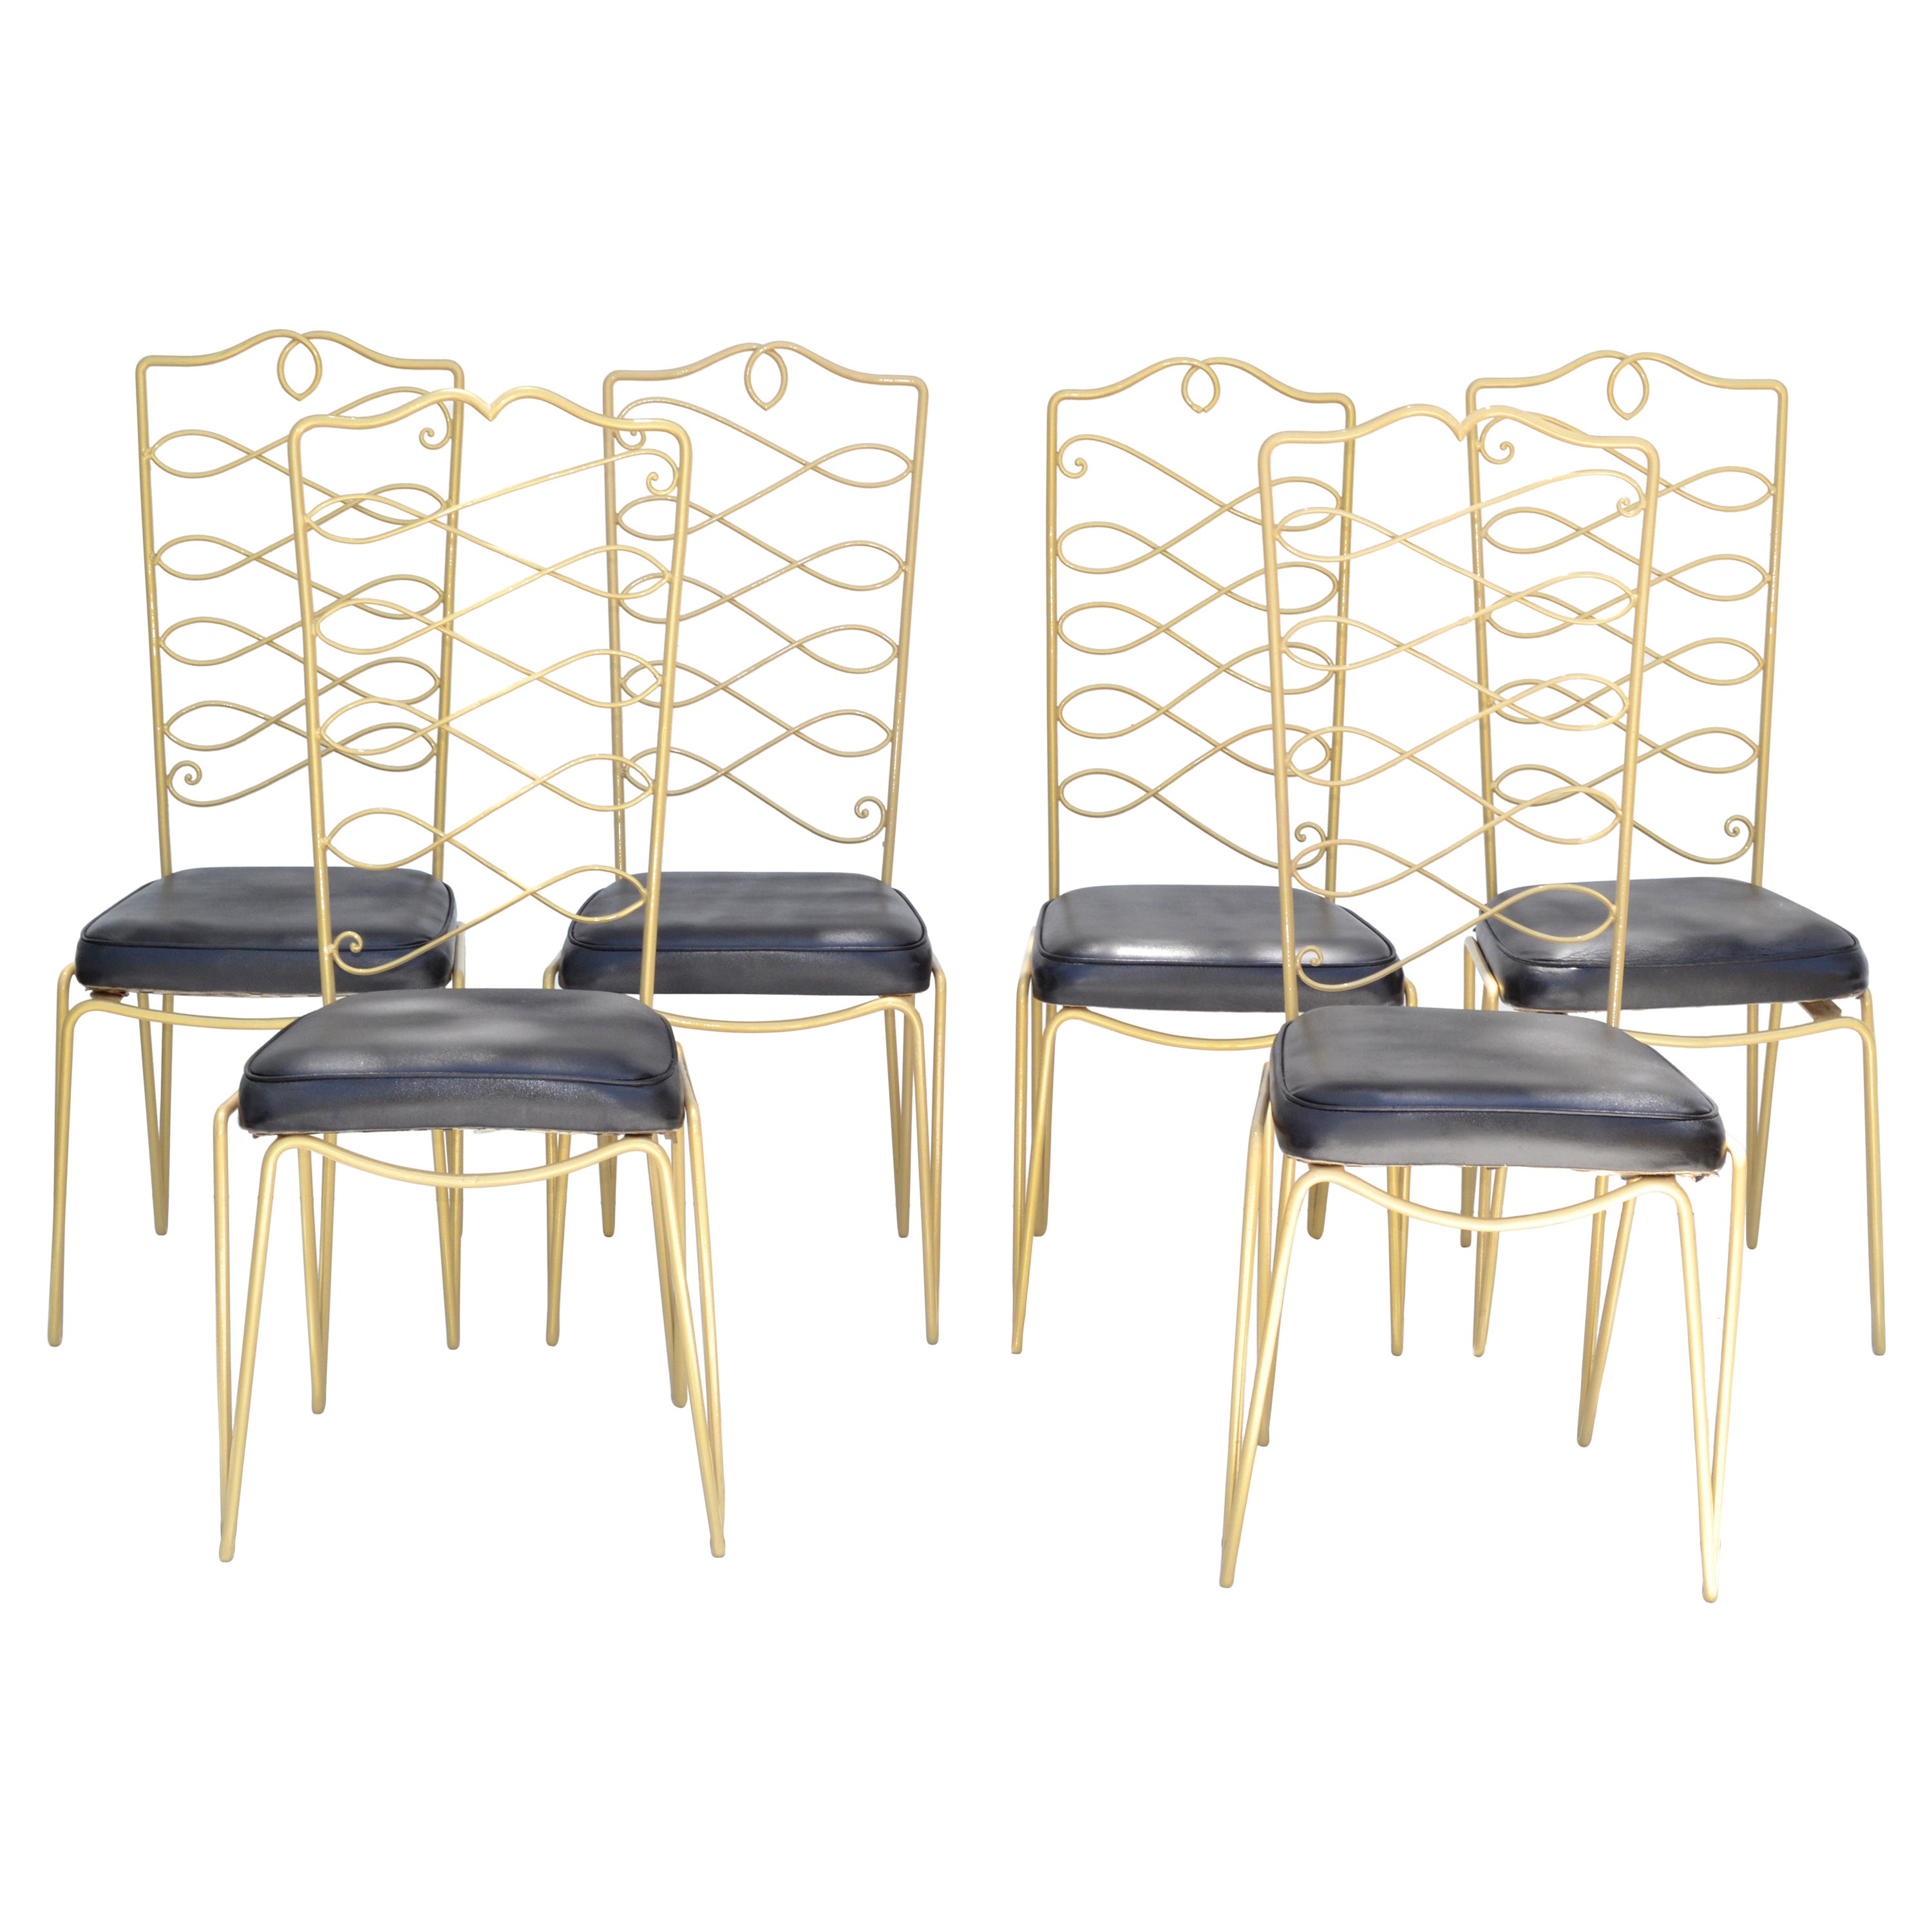 Rene Prou Art Deco Golden Wrought Iron Dining Room Chairs Black Vinyl Seats, 6